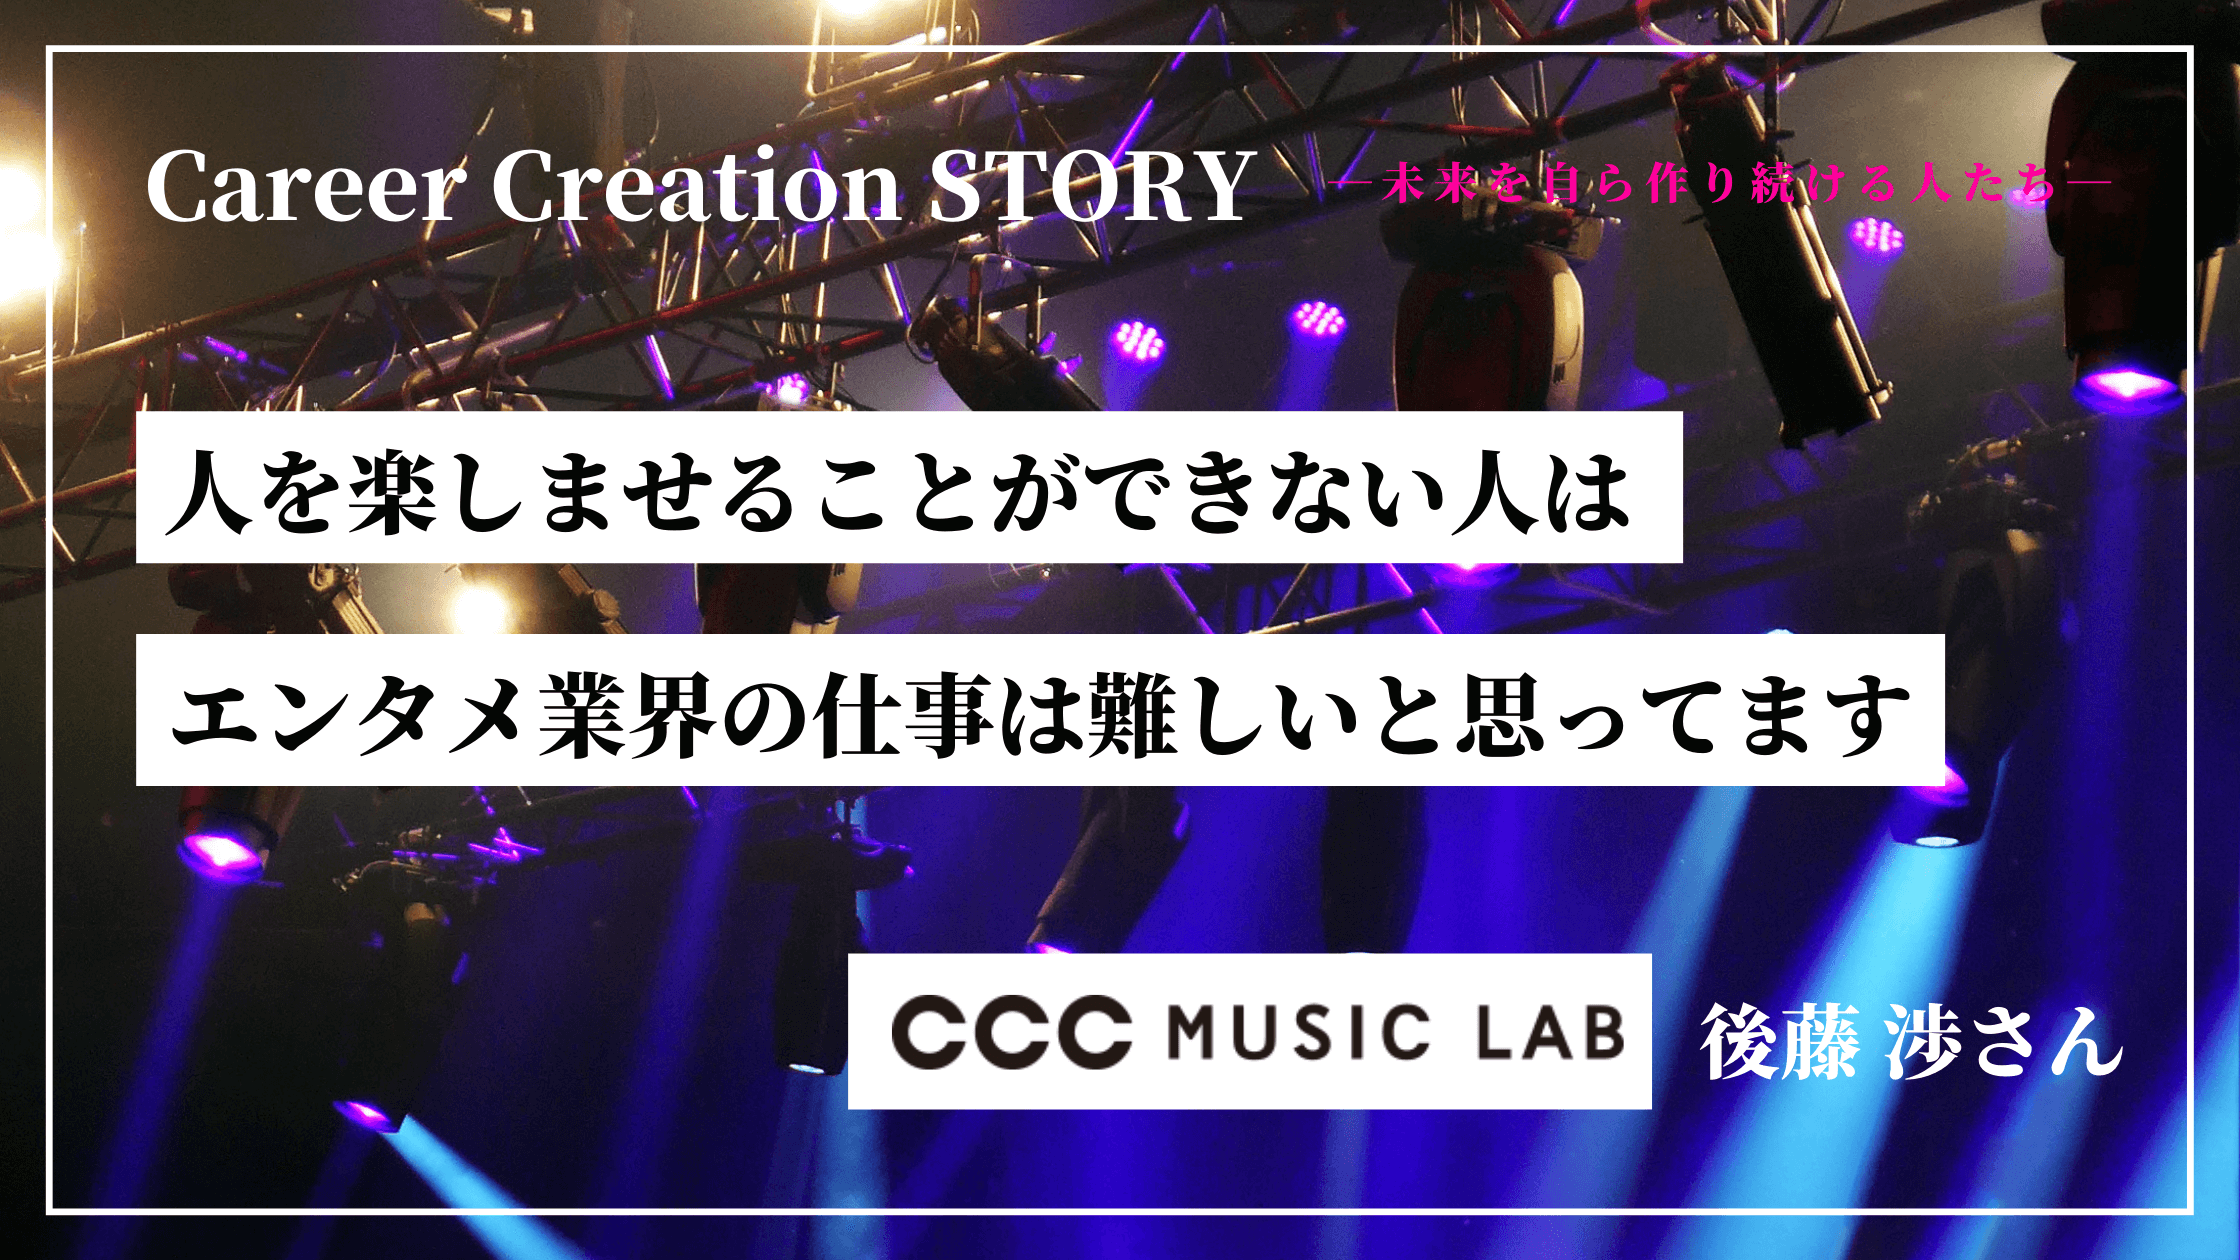 Career Creation STORY #11：（株）イトーキ 永井貴之さん